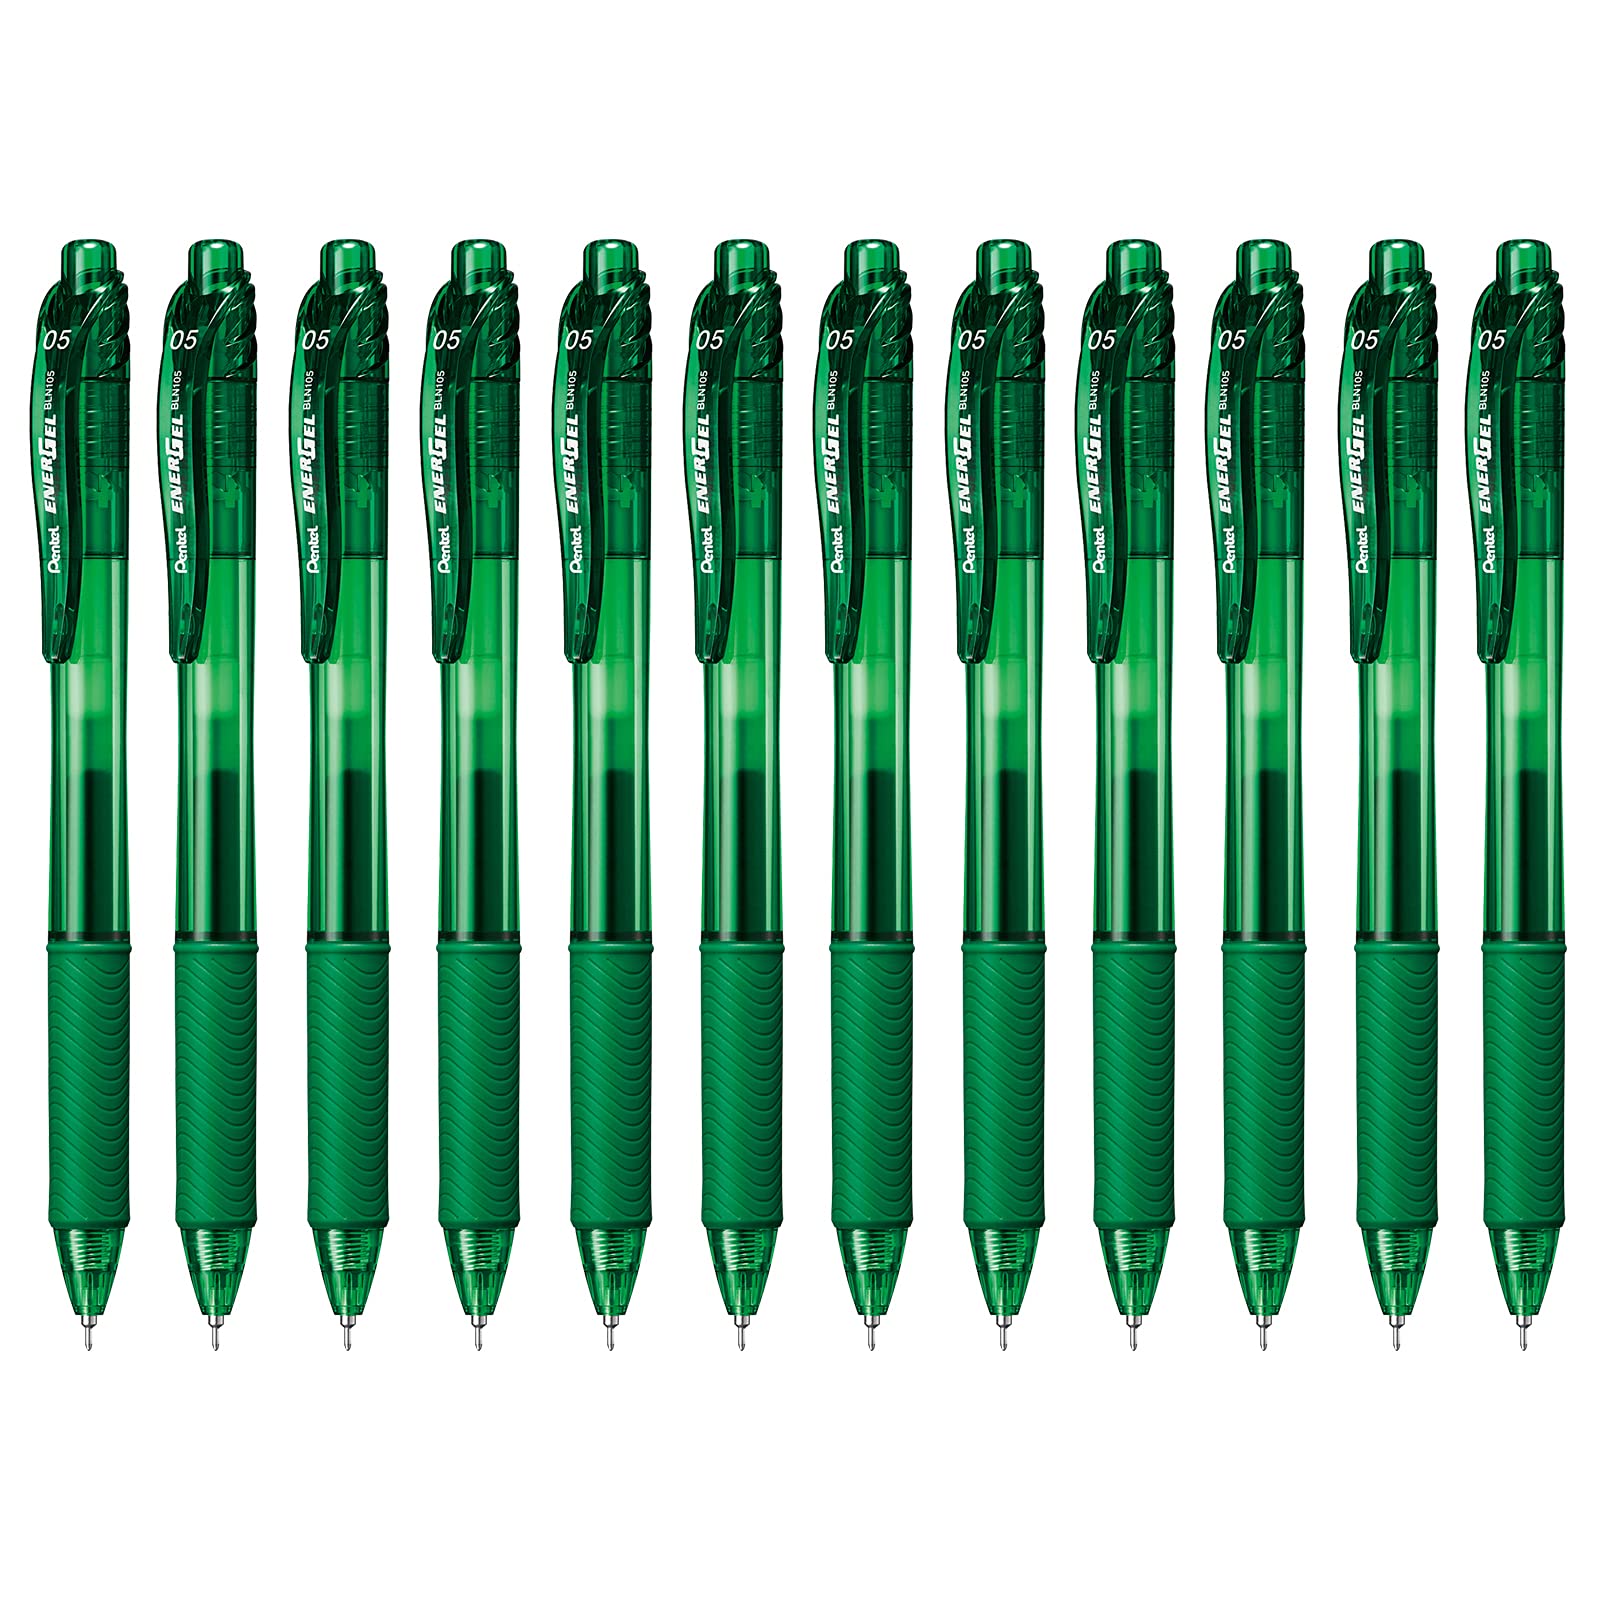 12-Pack Pentel 0.5mm EnerGel-X Retractable Liquid Gel Pen with Needle Tip (Various Colors)  $8.39 @ Amazon